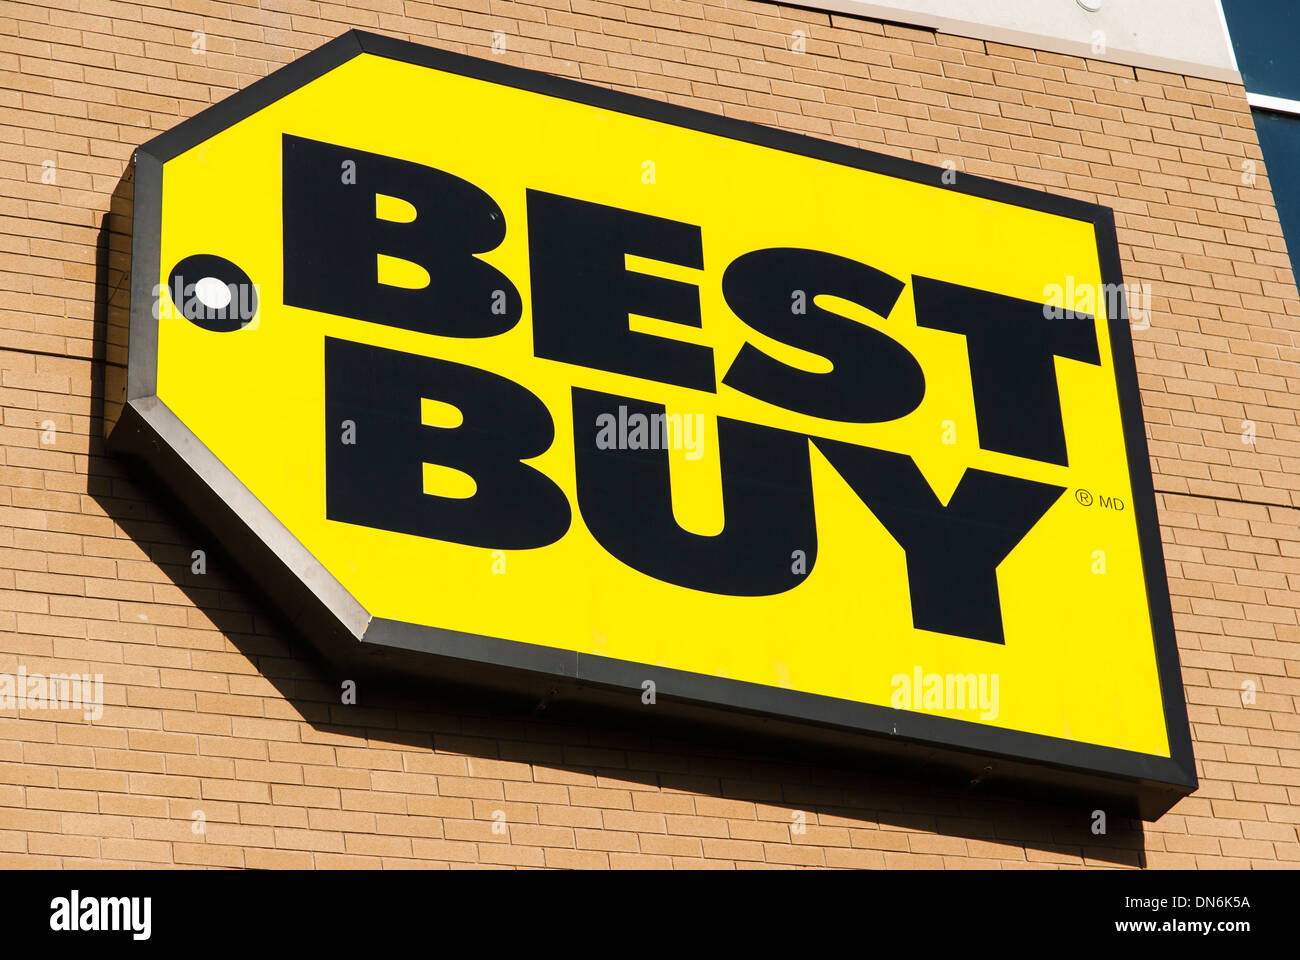 Best Buy electronics chain logo Stock Photo